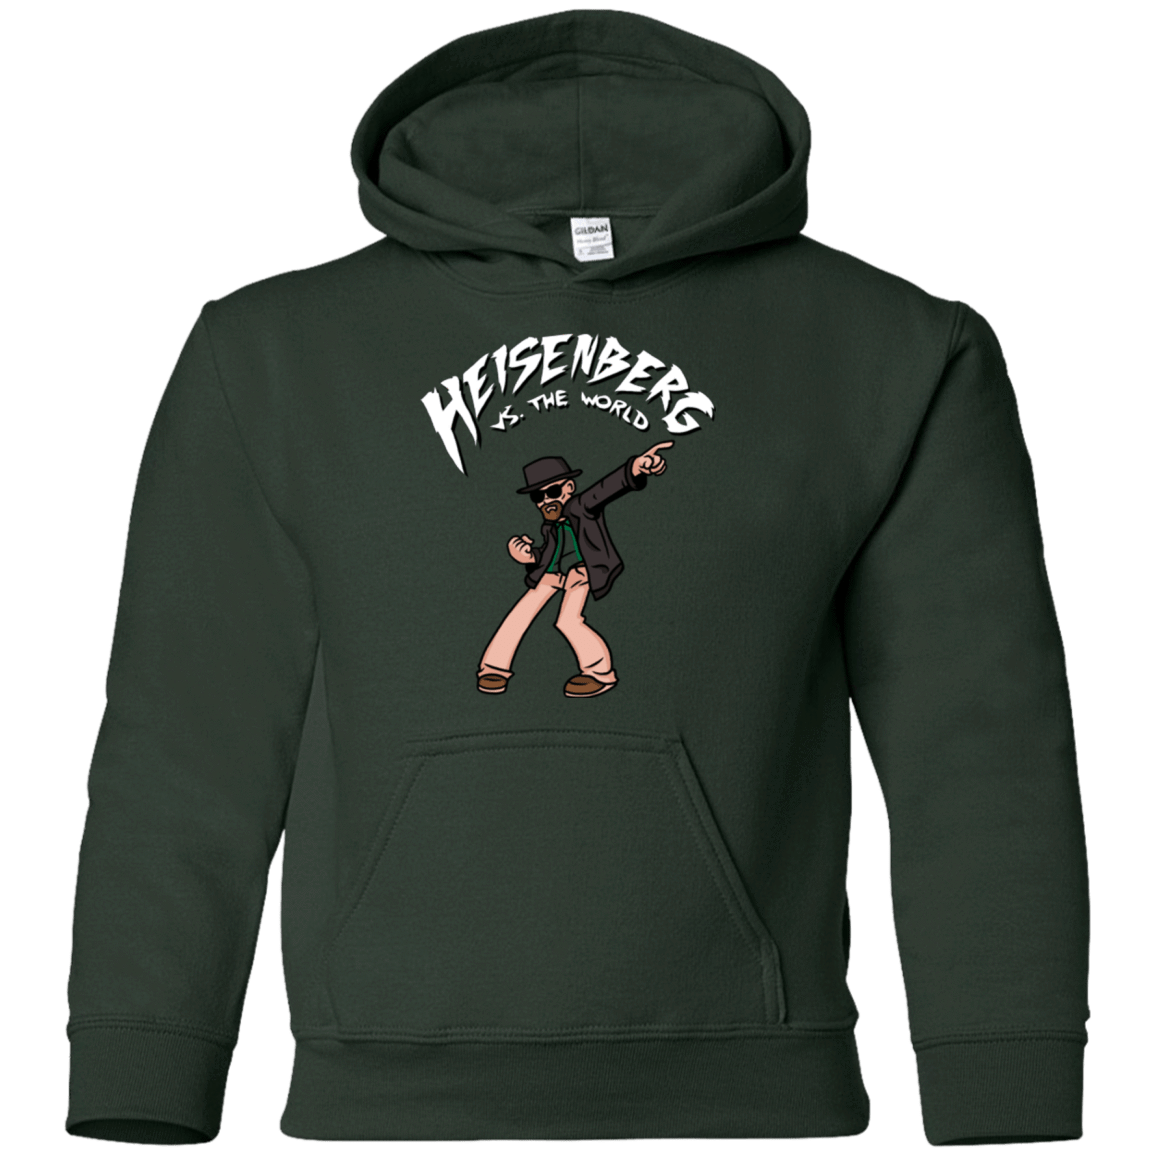 Sweatshirts Forest Green / YS Heisenberg vs the World Youth Hoodie